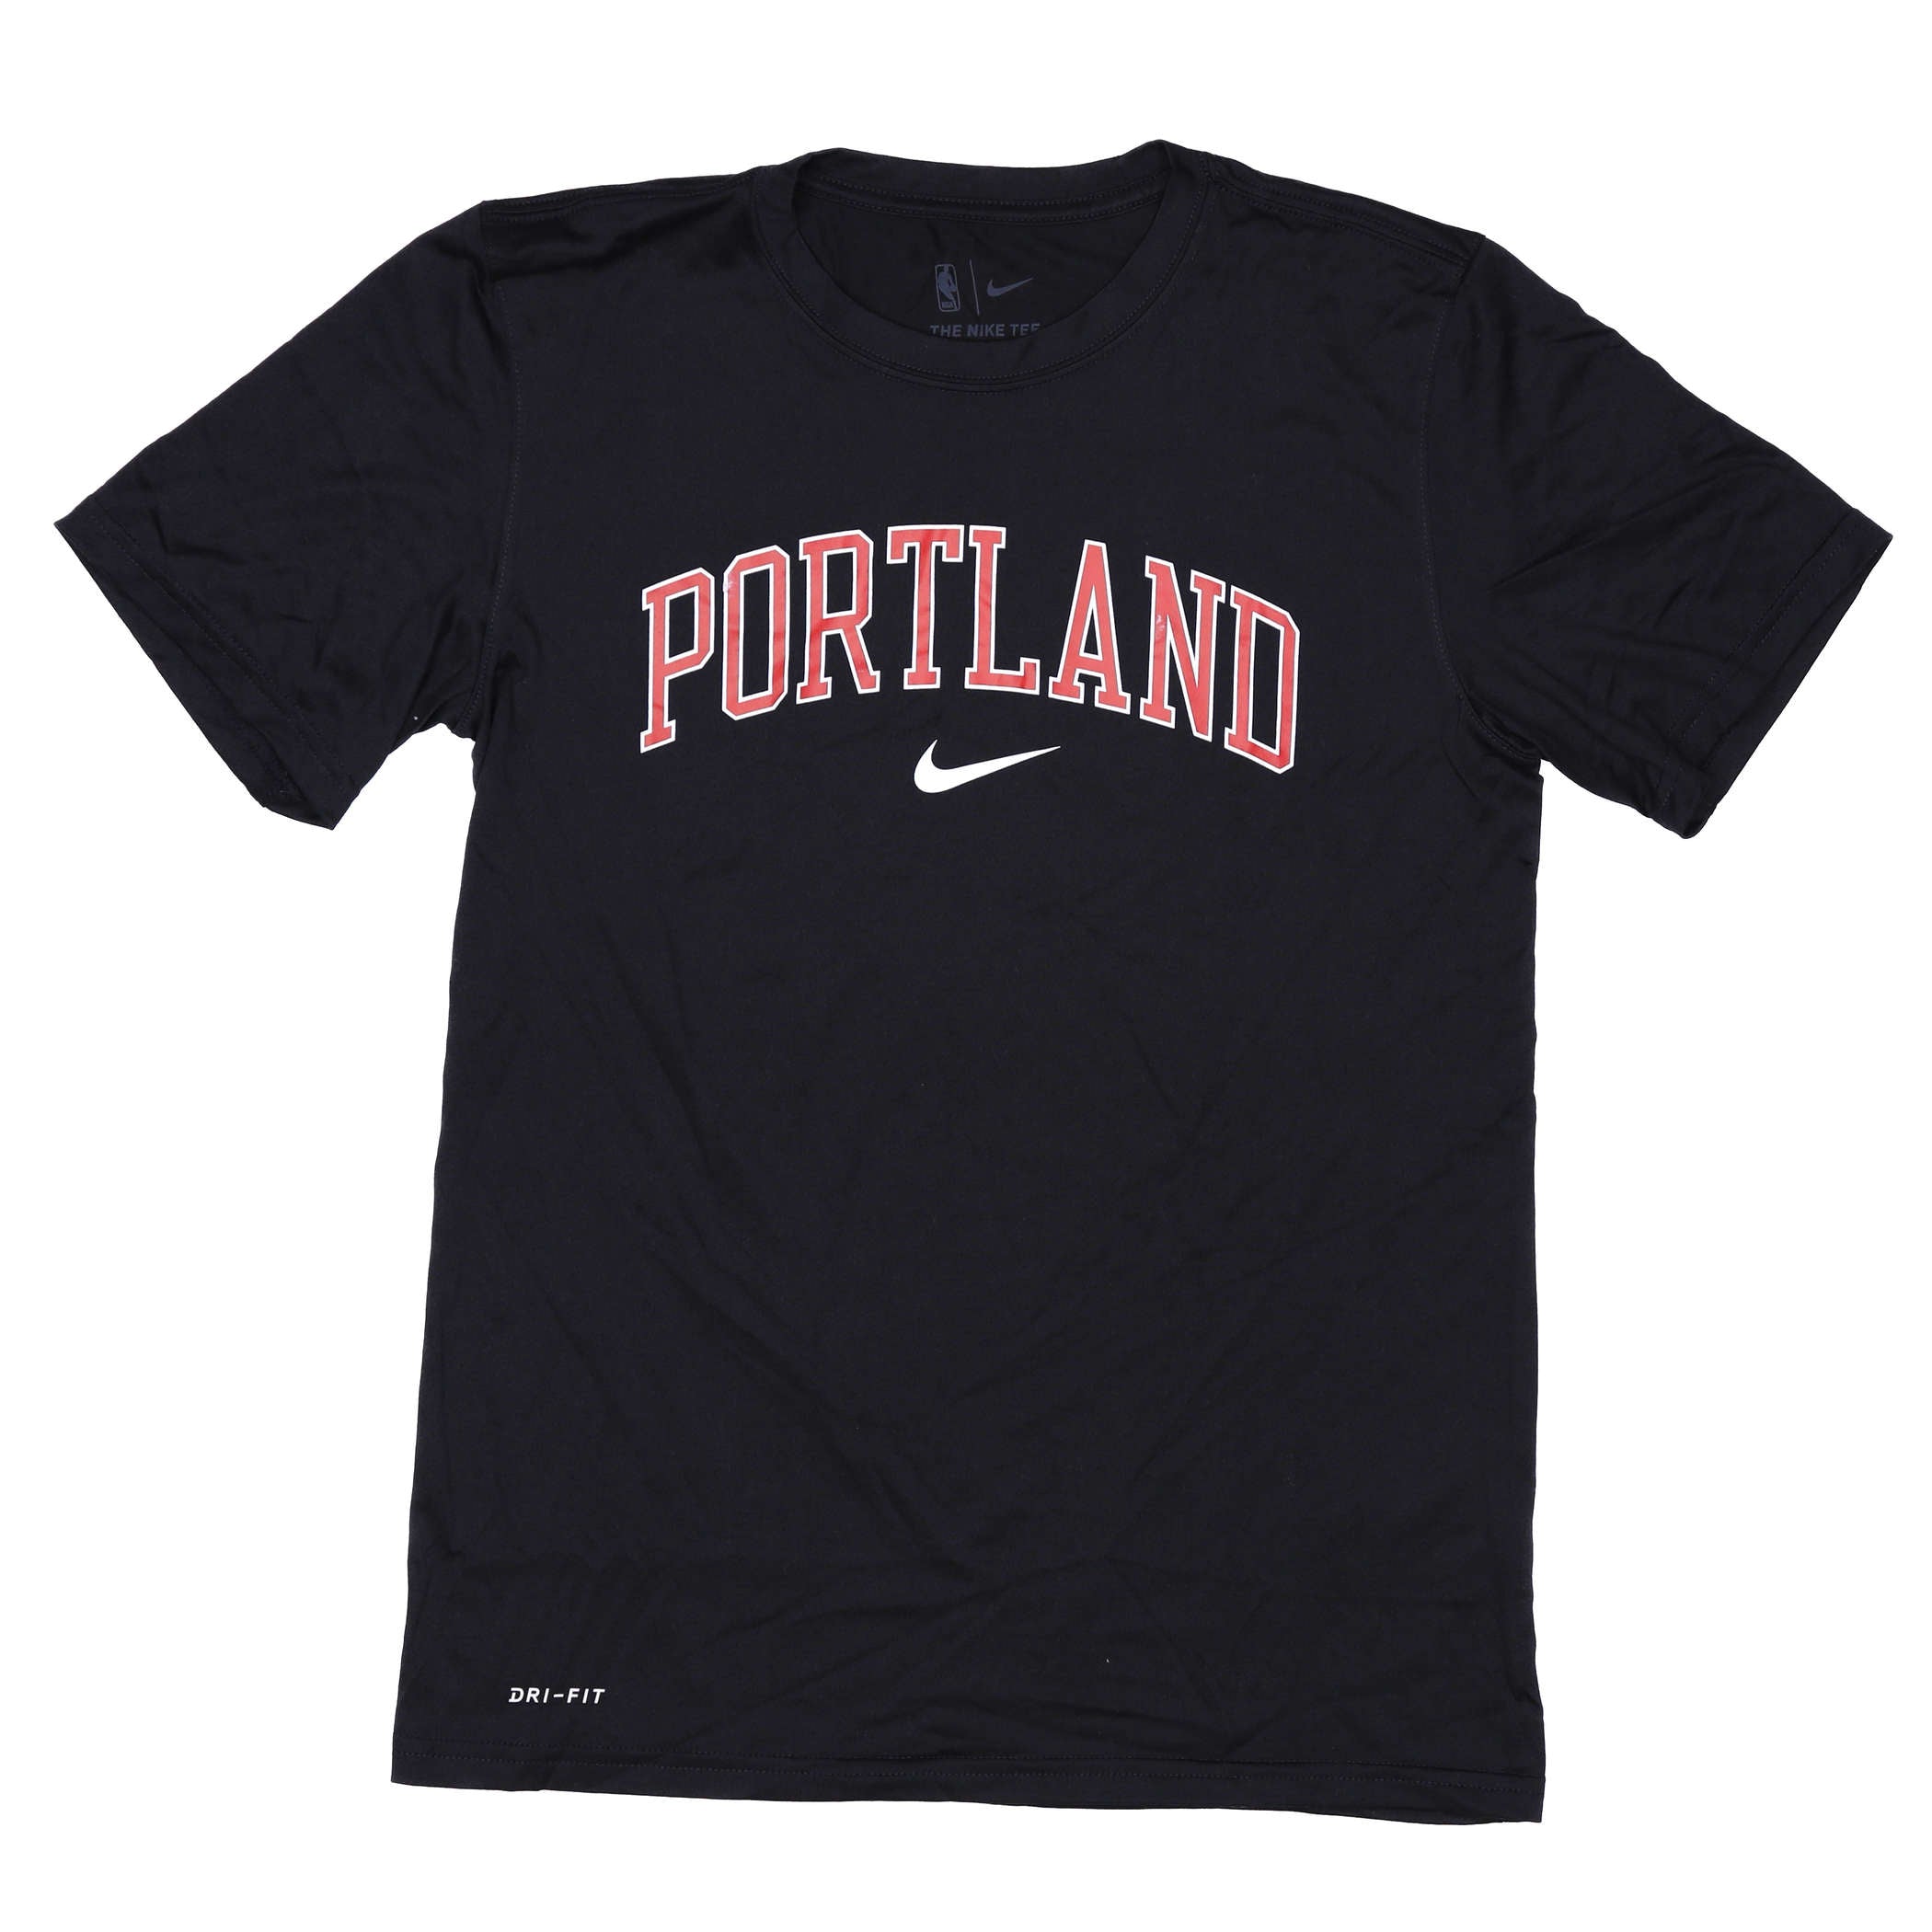 Nike Men's Portland Trail Blazers Dri-Fit 1/4 Zip Top - Red - S Each